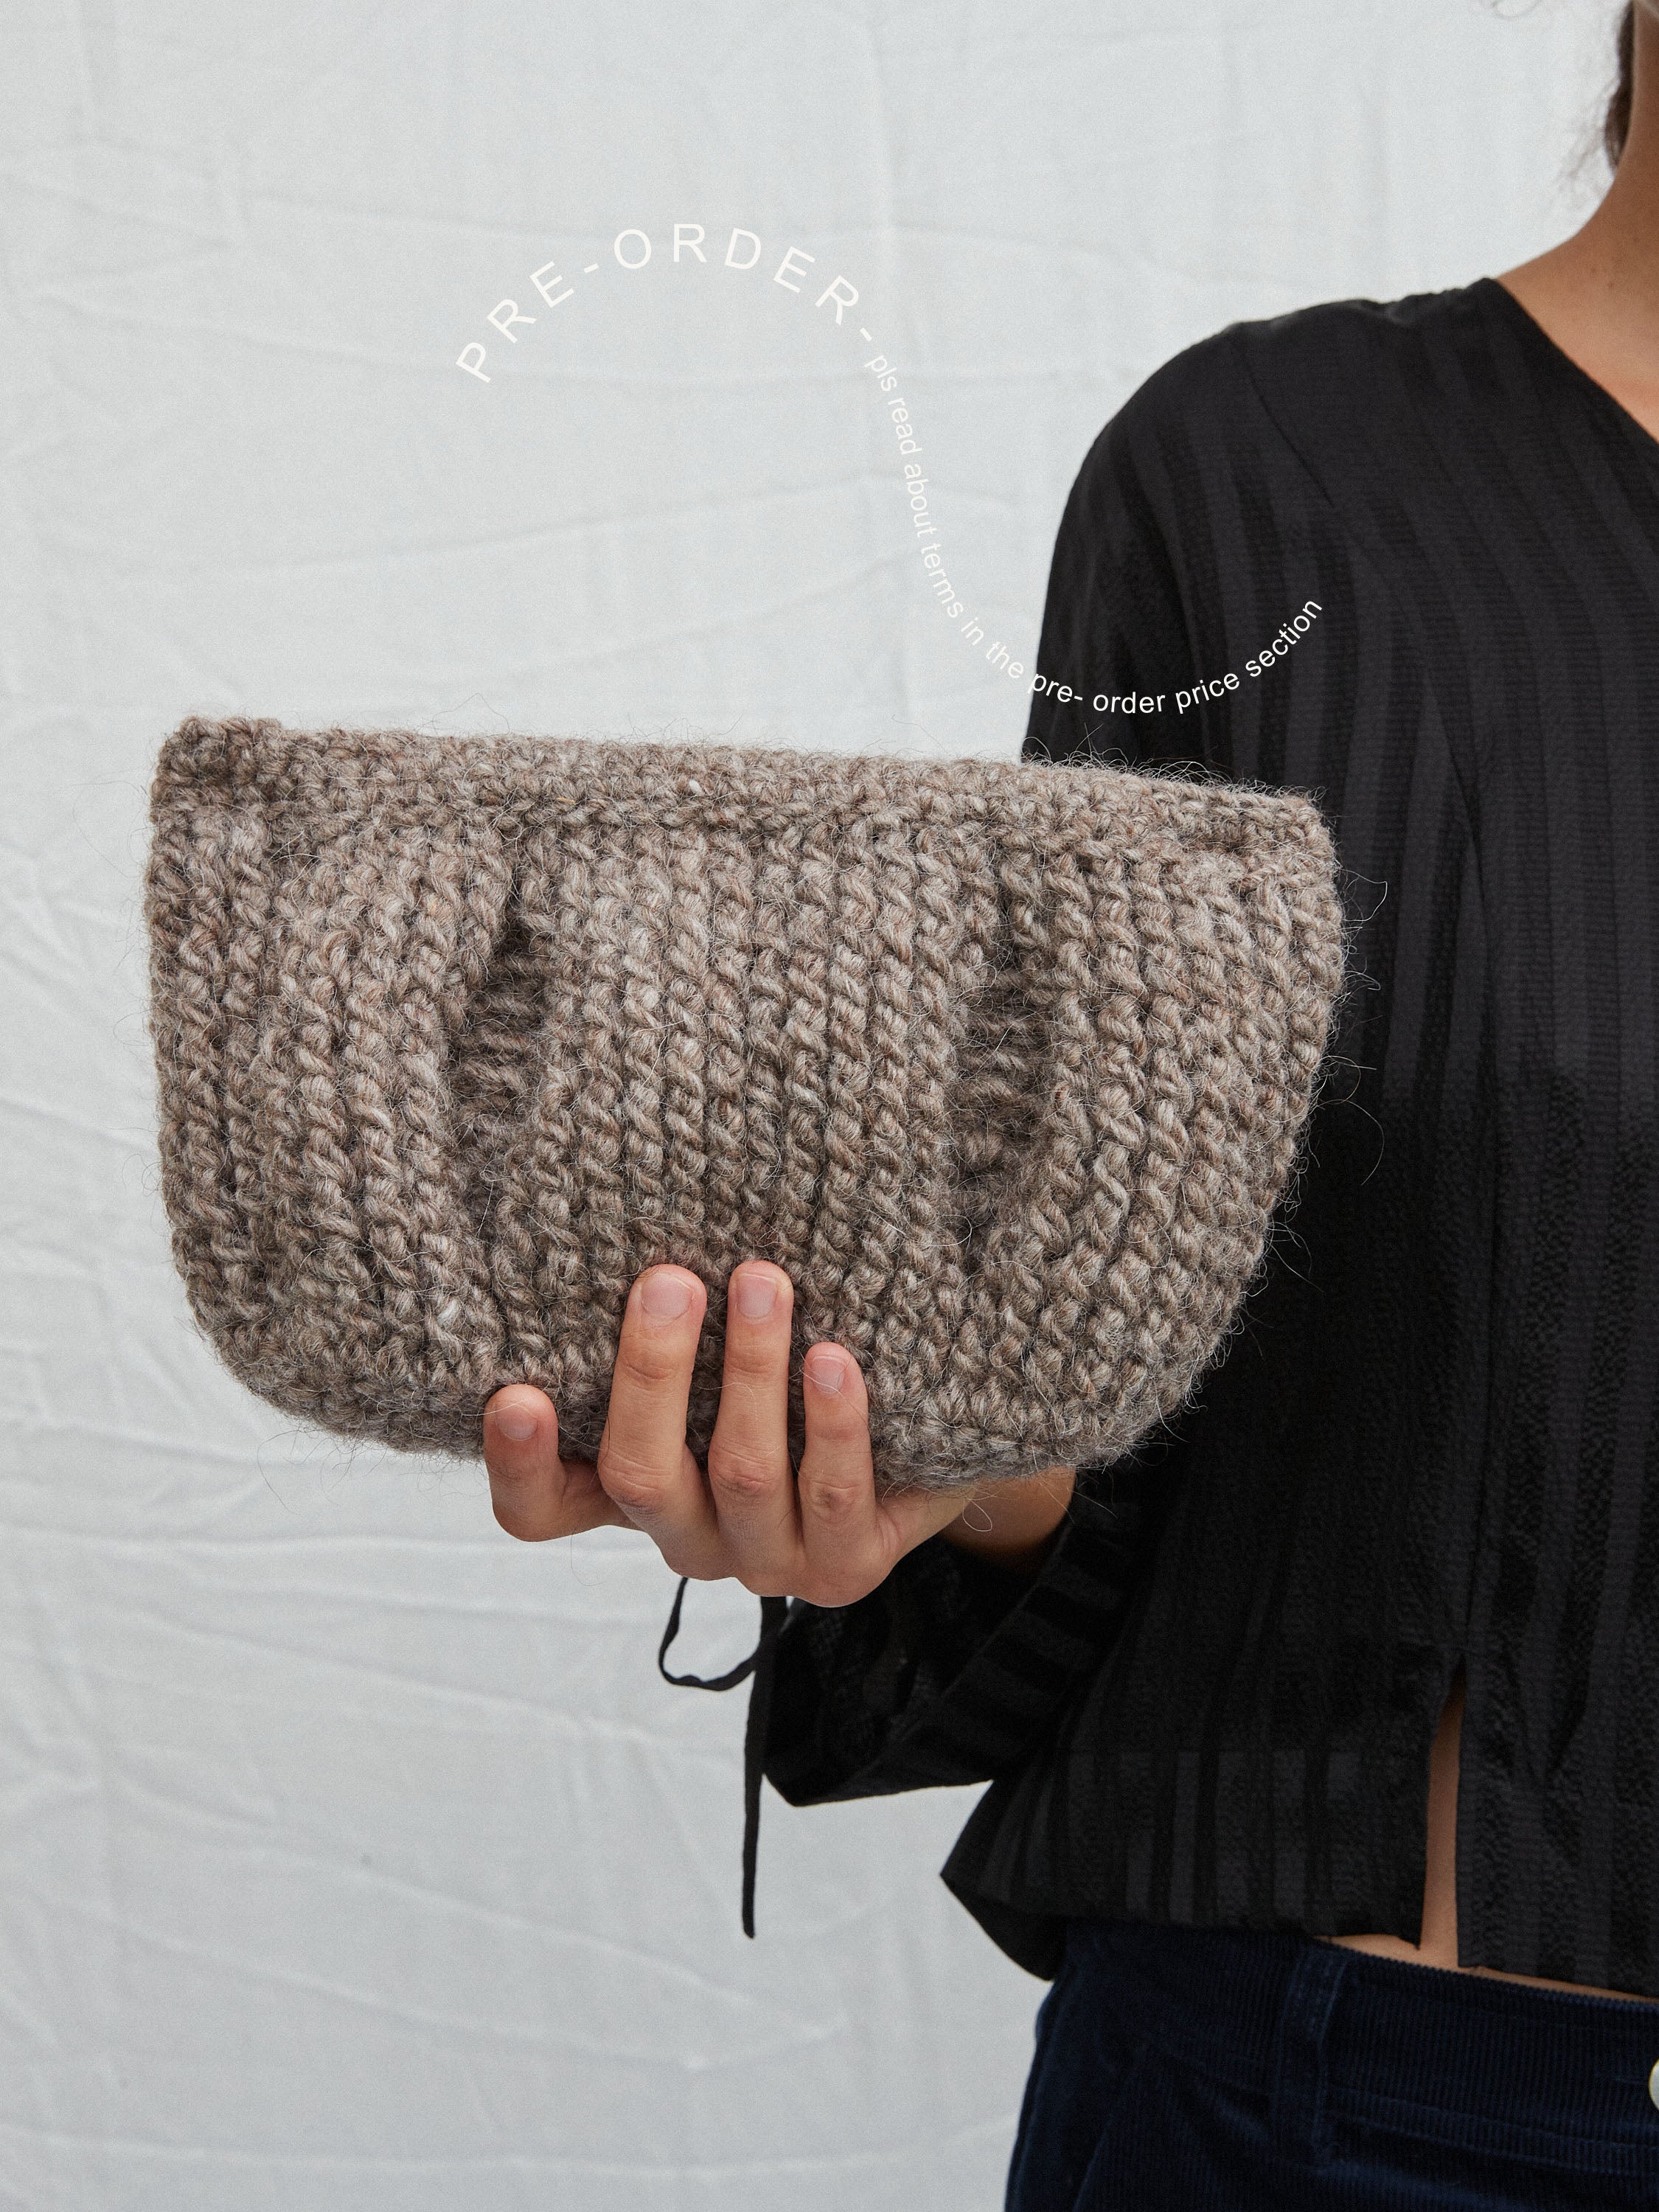 Shell Crochet Clutch Dark Sand・PRE-ORDER ITEM・1499 DKK